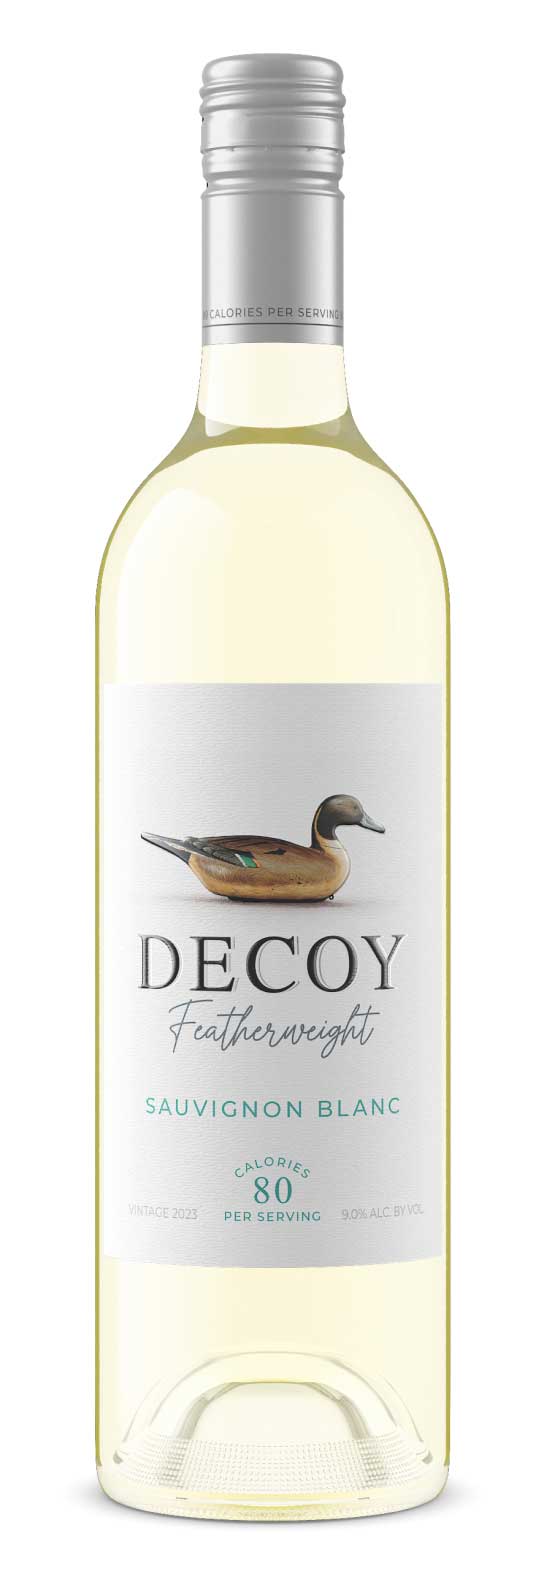 Decoy Featherweight bottle